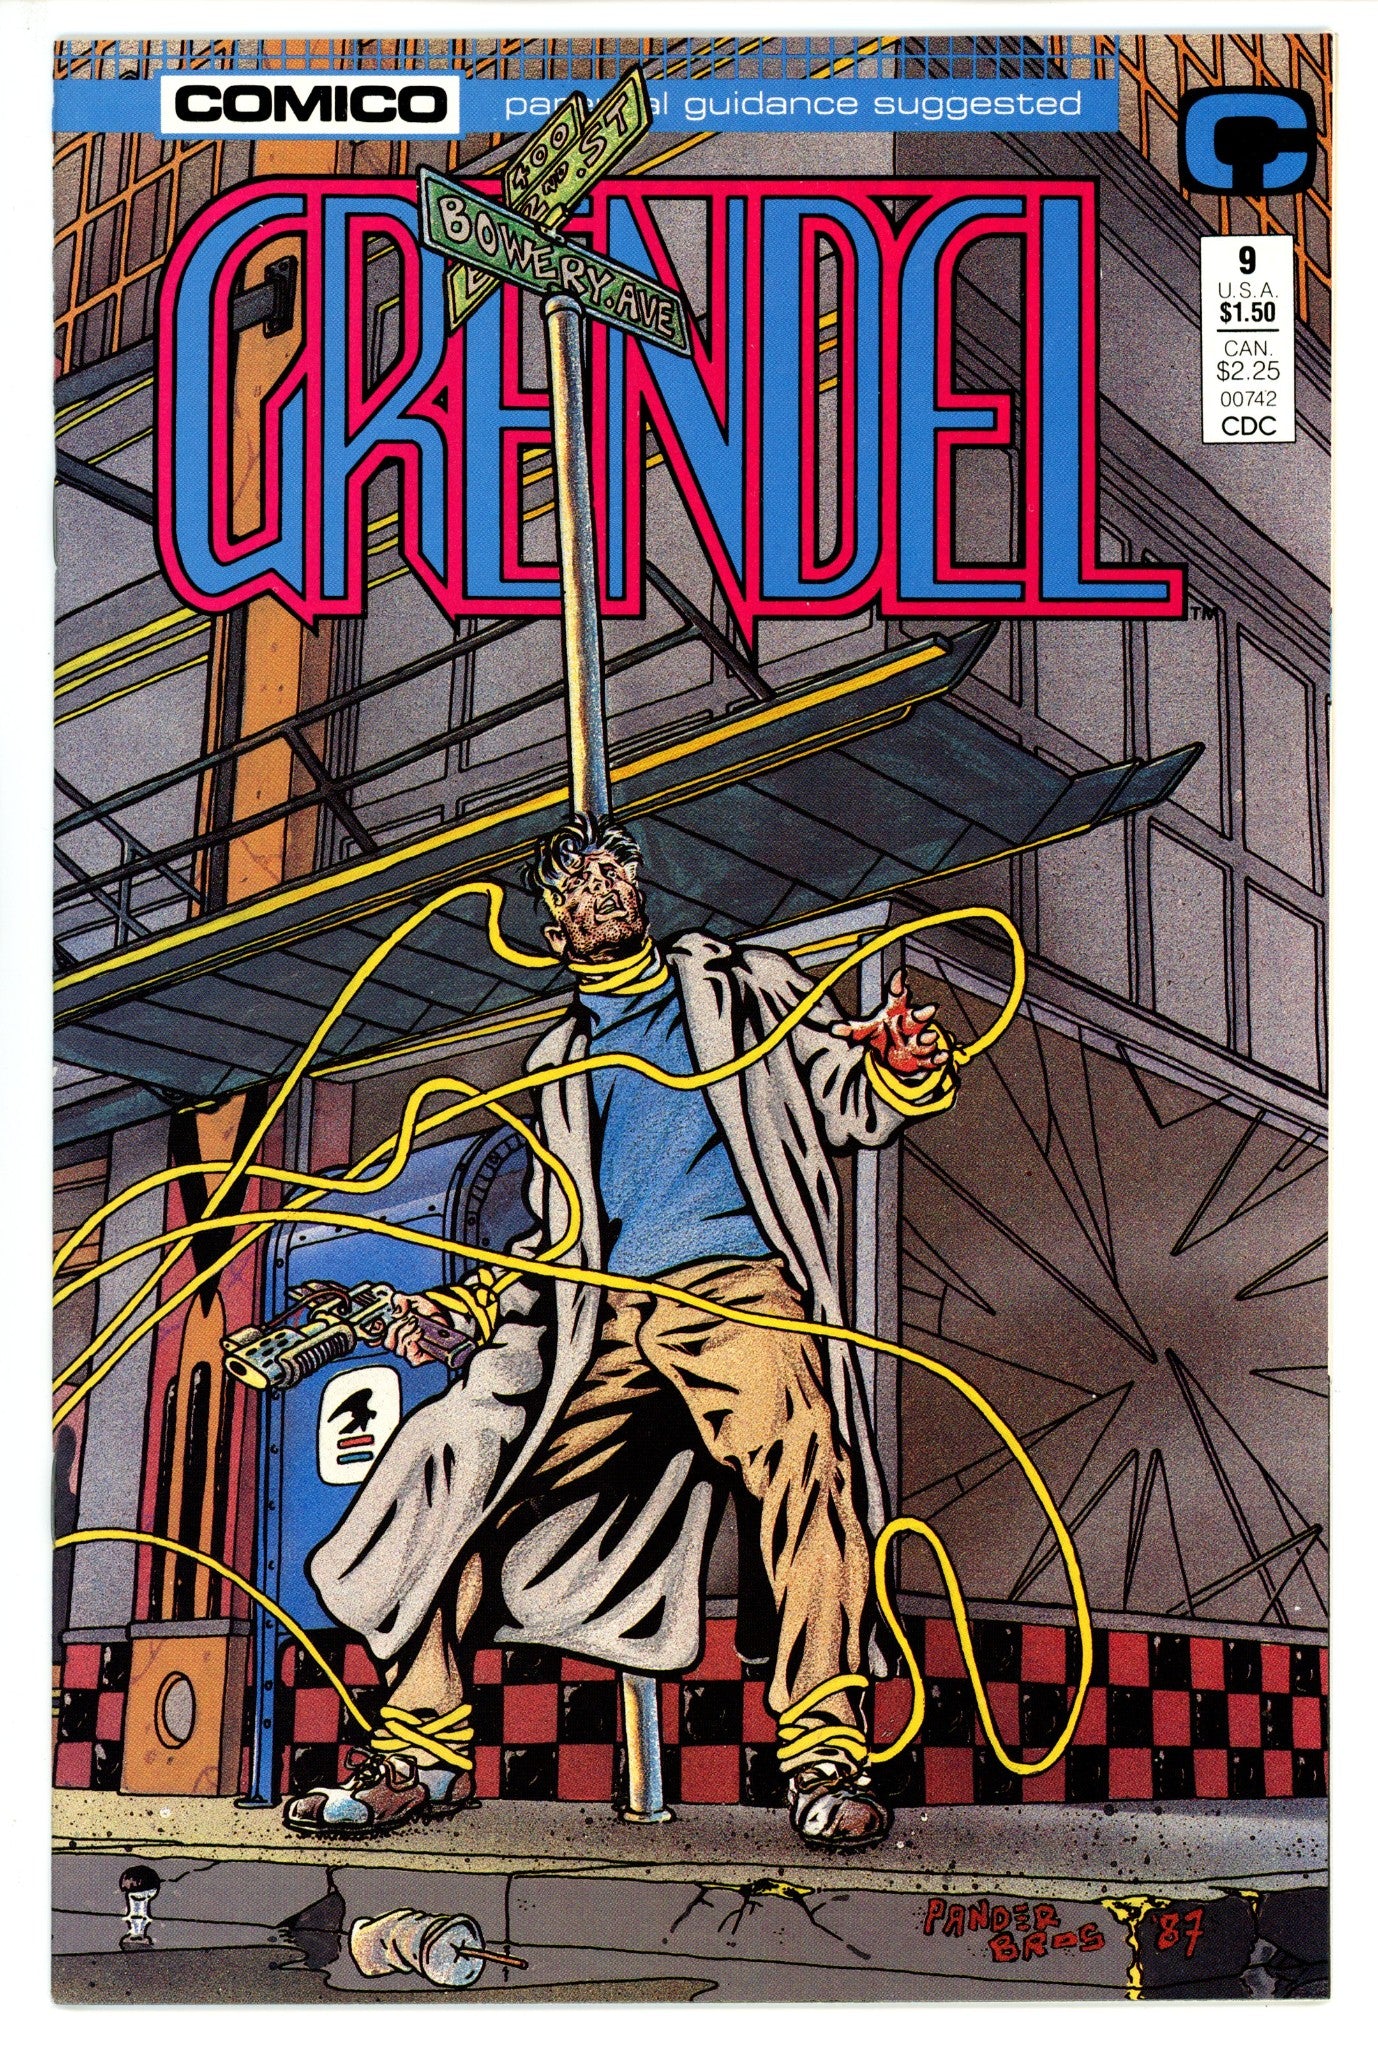 Grendel Vol 2 9 (1987)